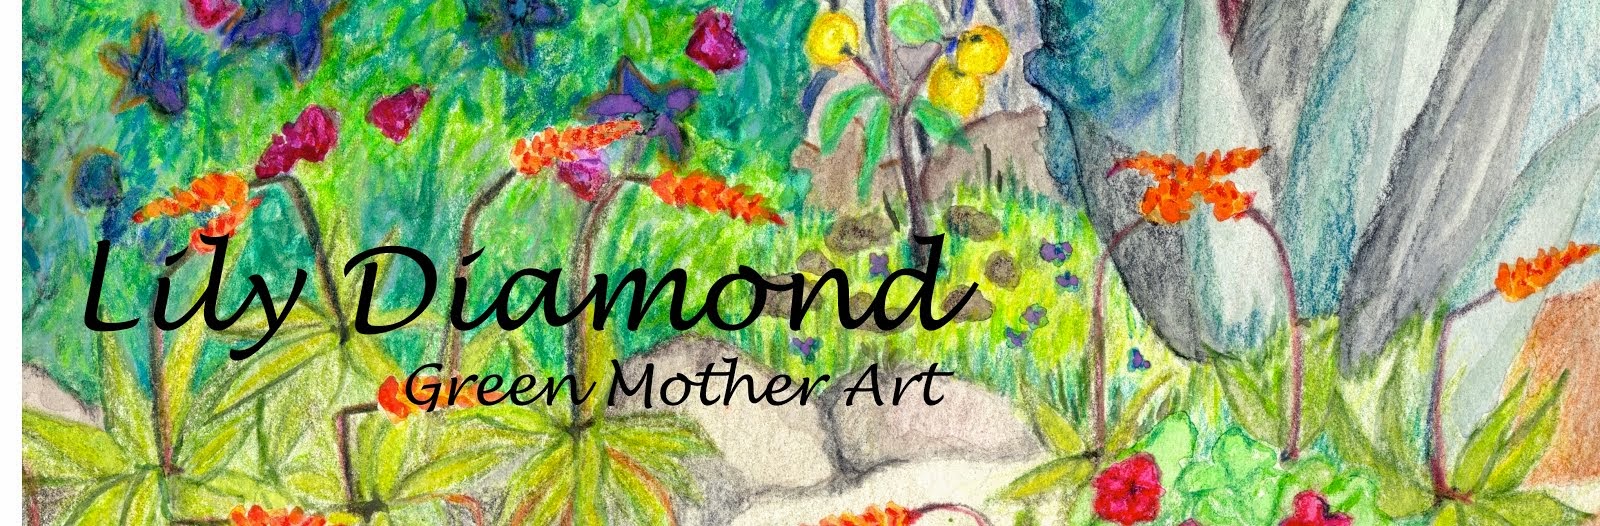 Lily Diamond Art - Green Mother Art